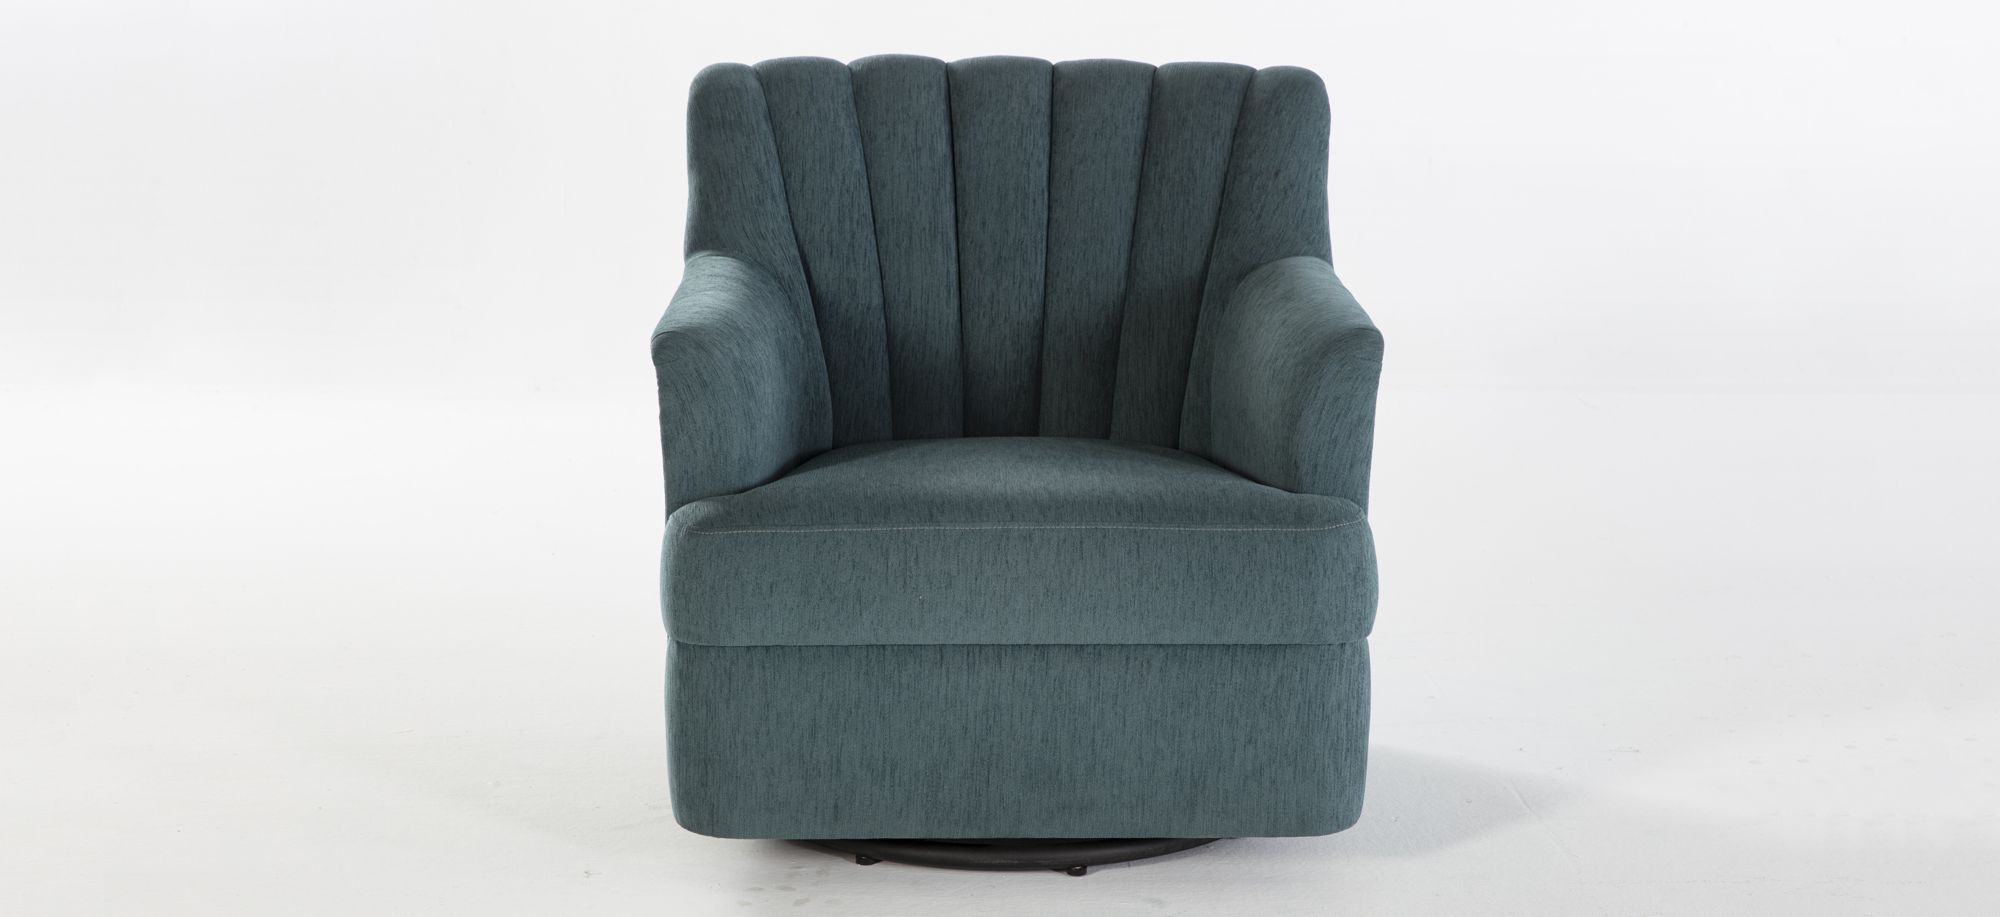 Urbane Swivel Chair in URBANE PETROL BLUE by HUDSON GLOBAL MARKETING USA